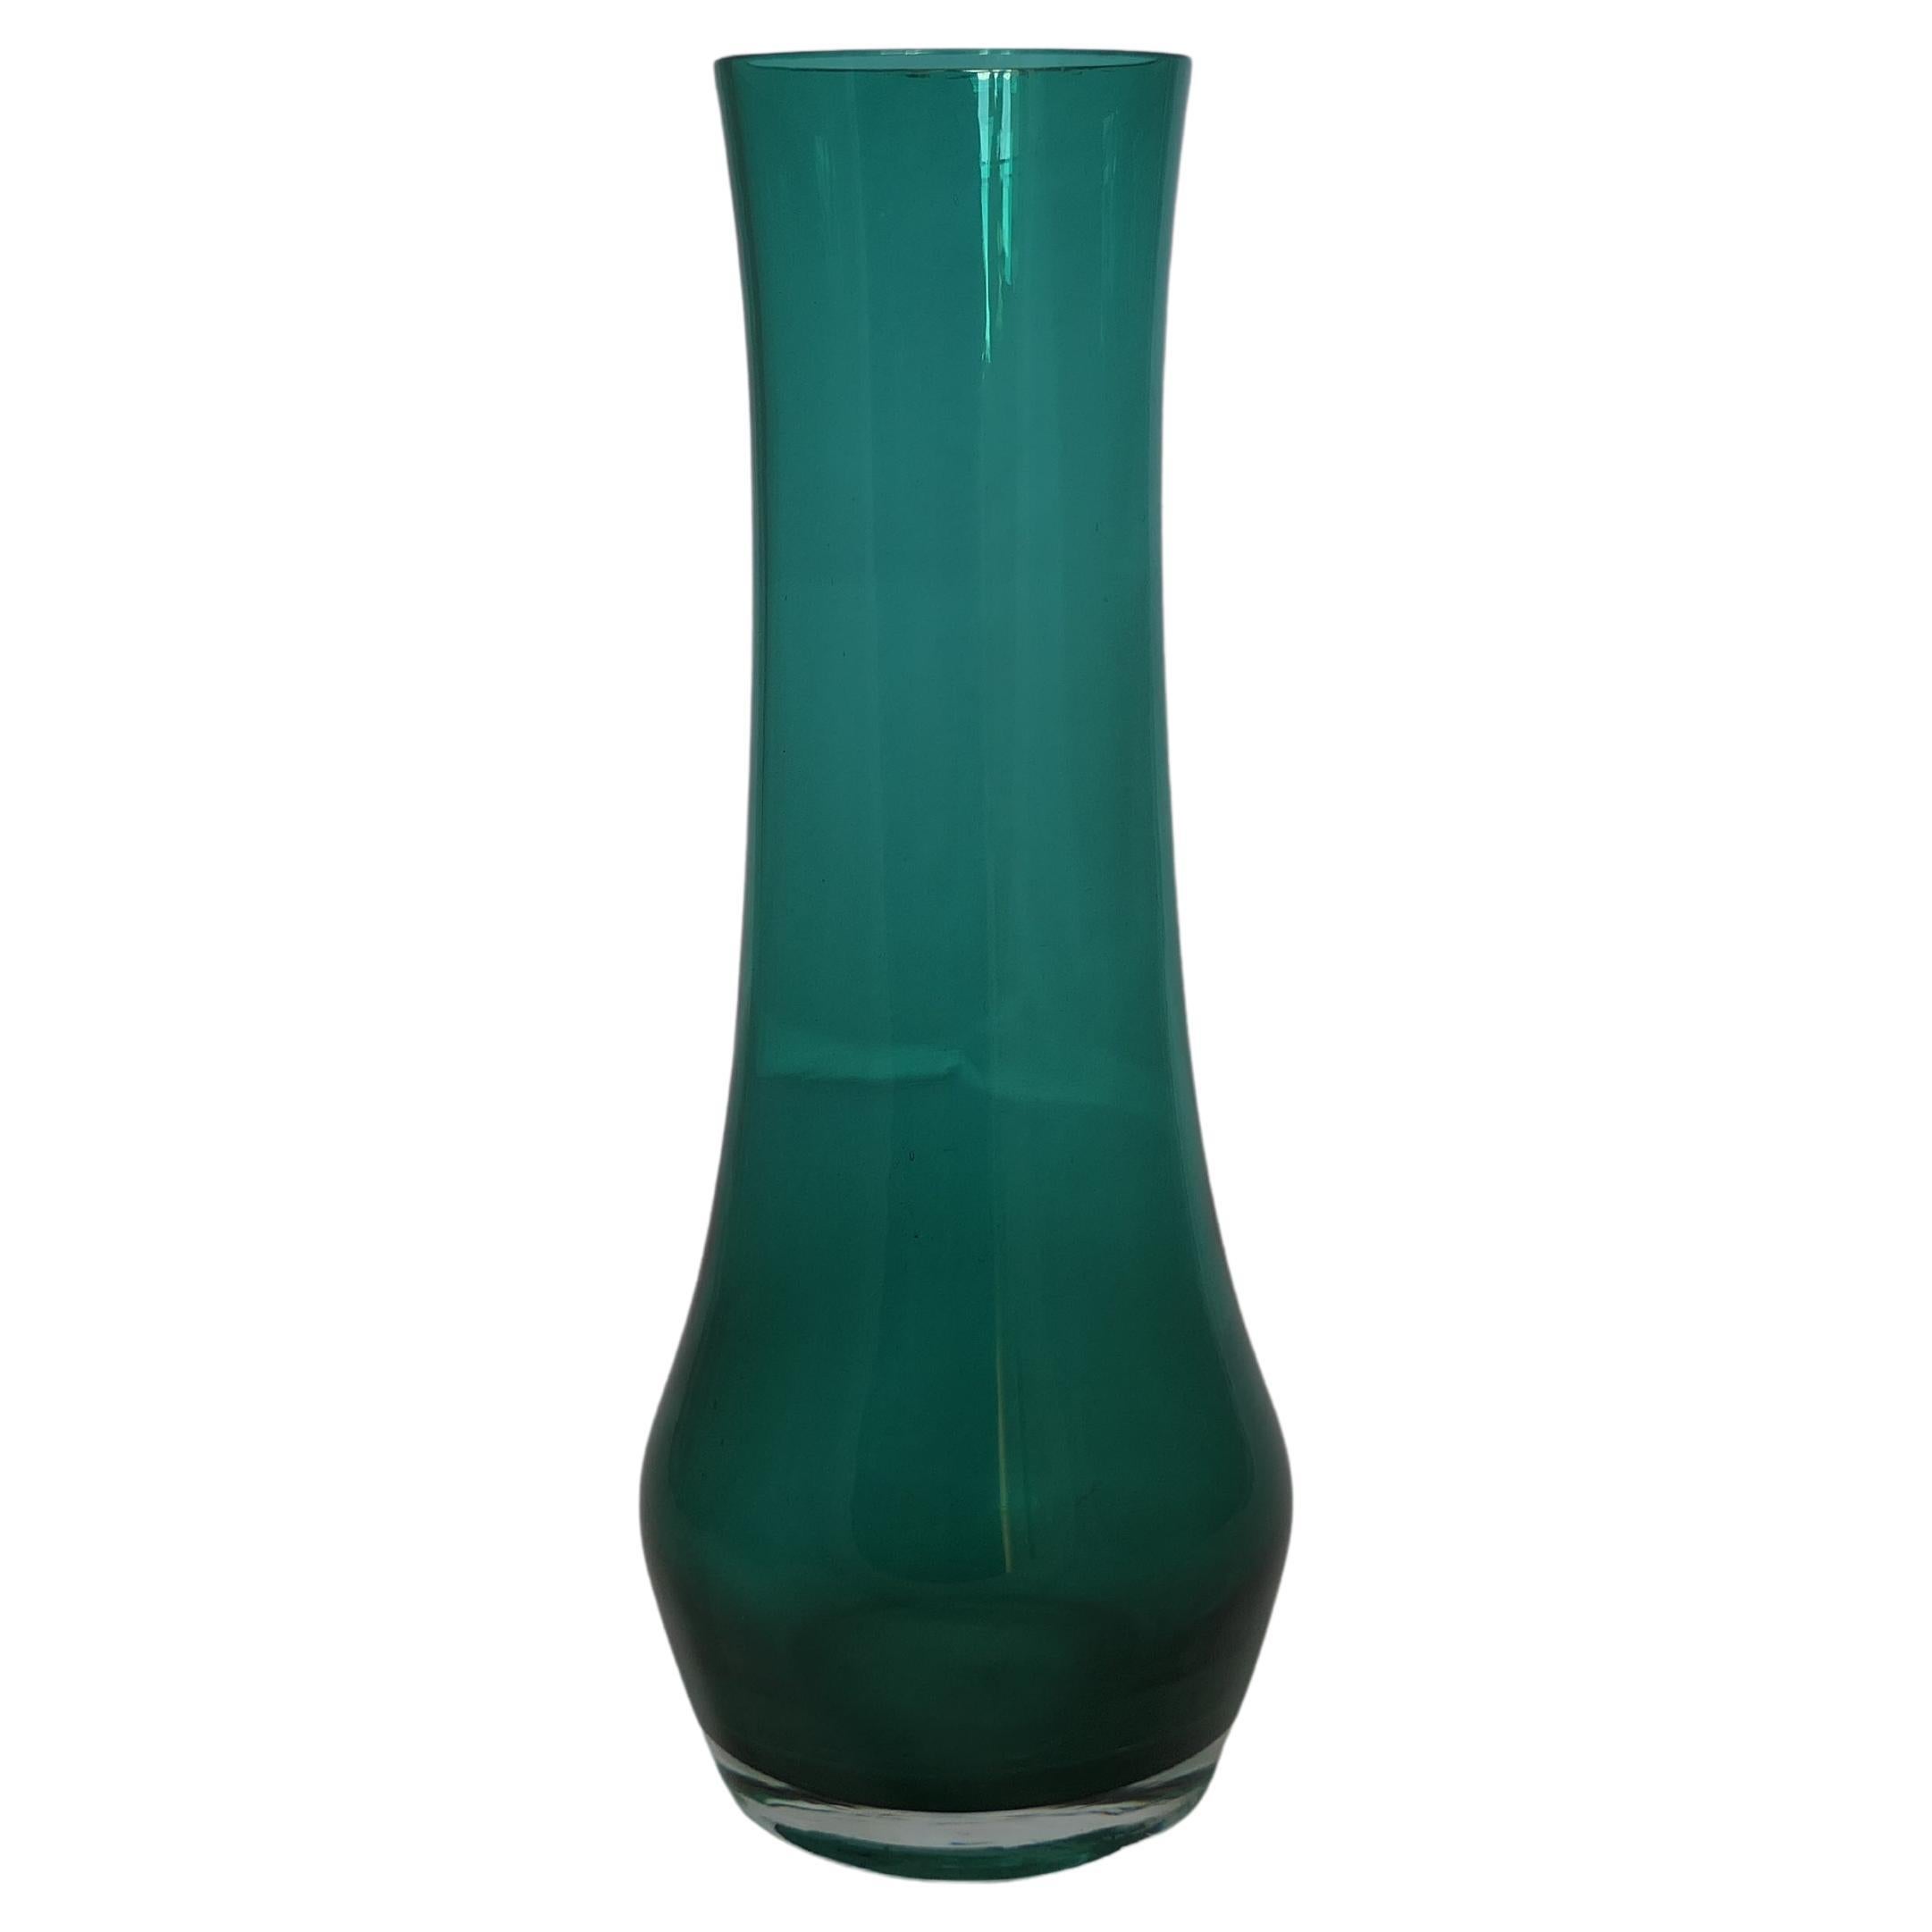 1960s Green Glass Vase by Tamara Aladin for Riihimäen Lasi Oy     